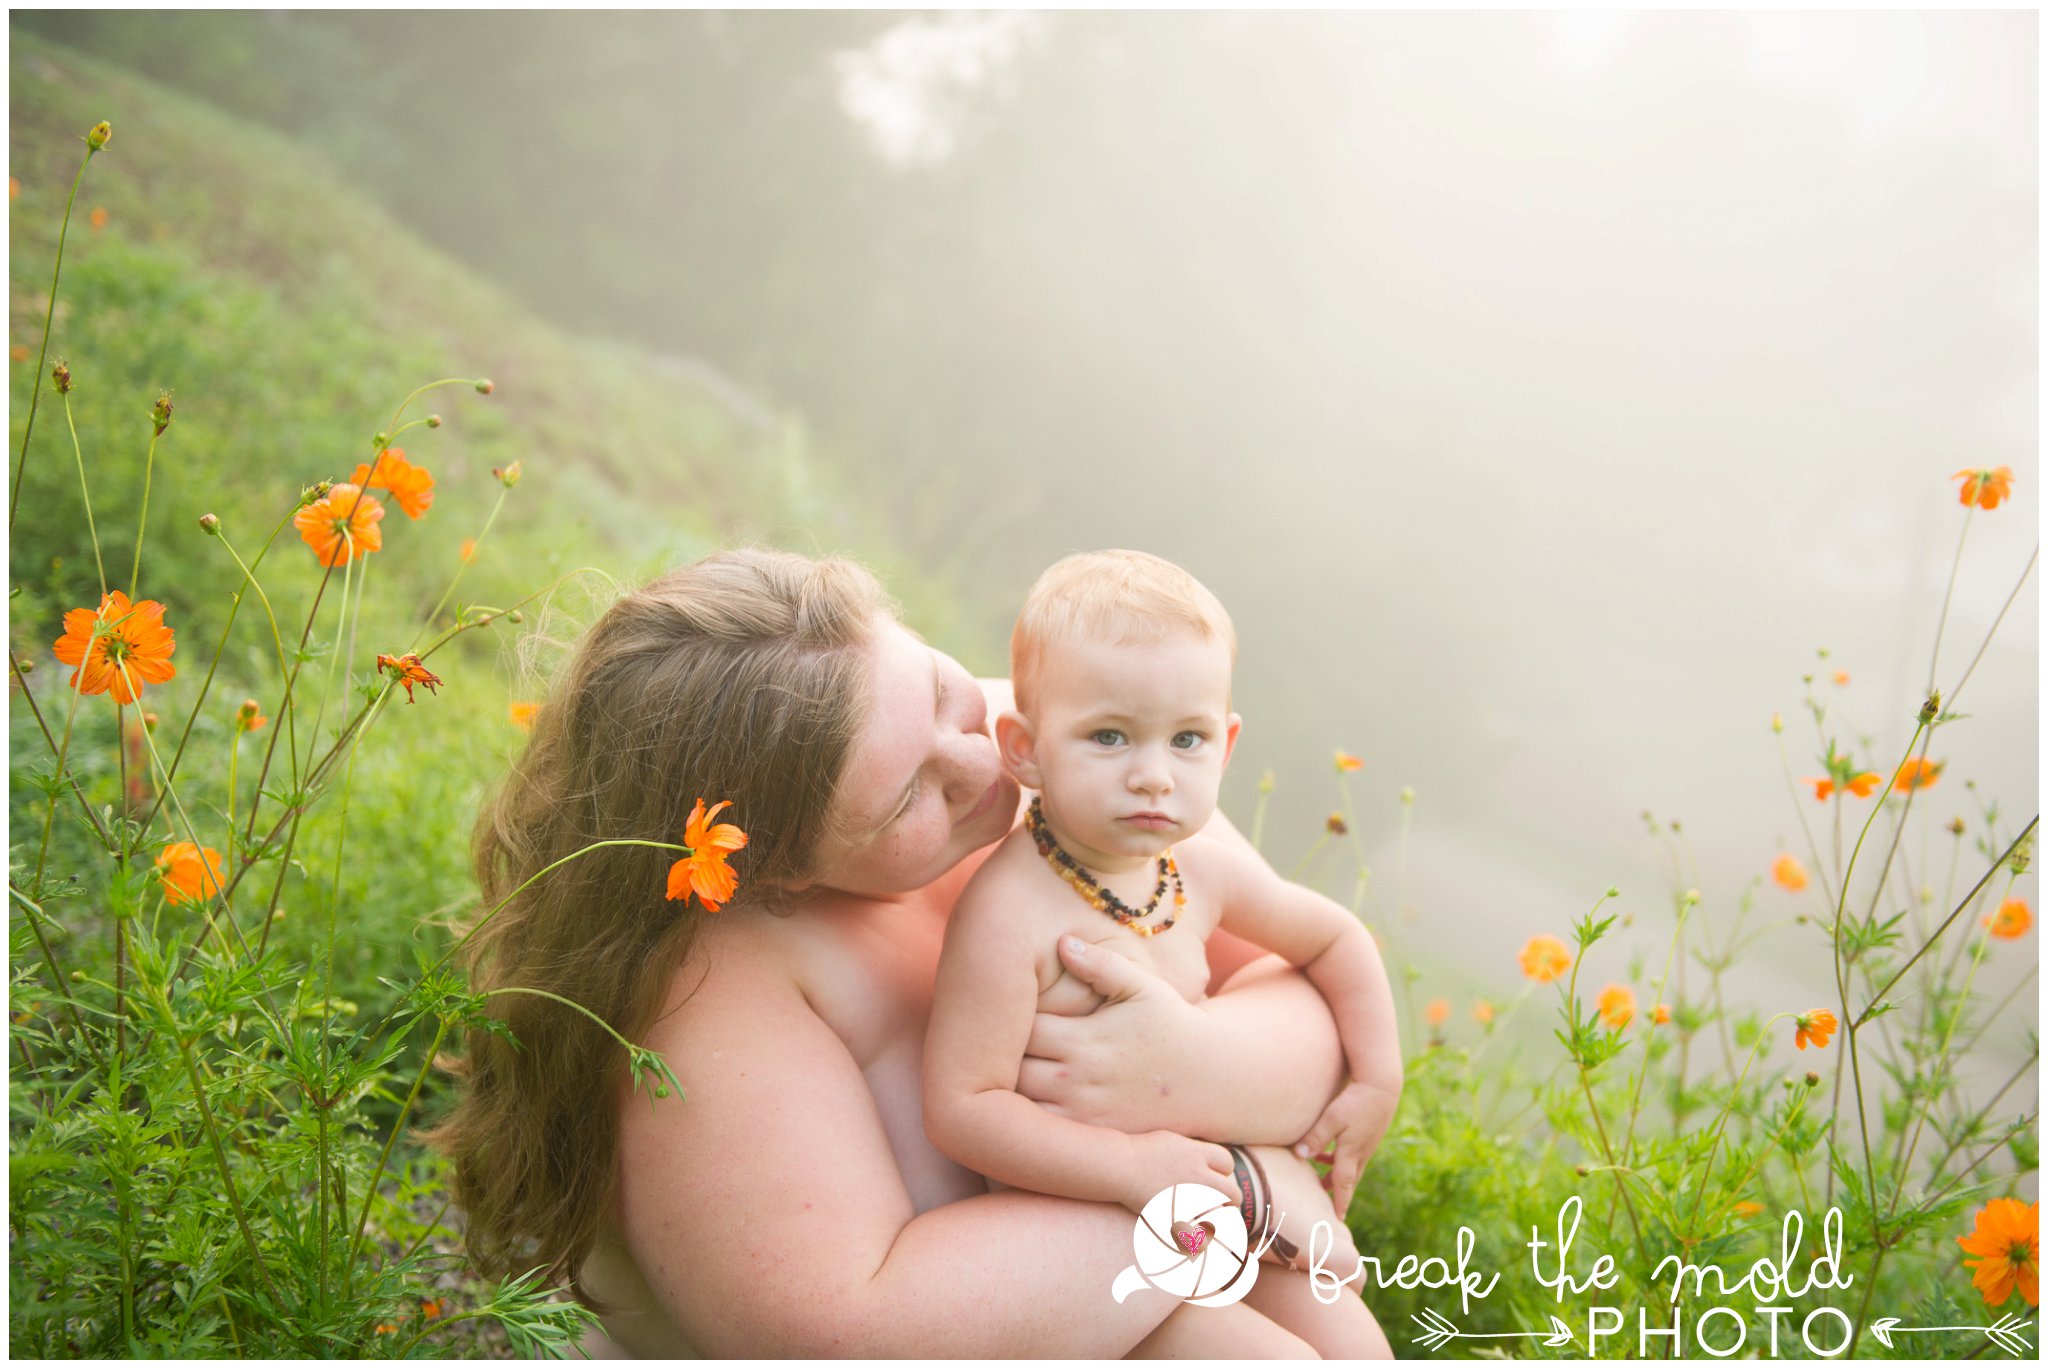 break-the-mold-photo-nursing-breastfeeding-session-womens-beauty-woman-body-nurse-breastfed (18).jpg